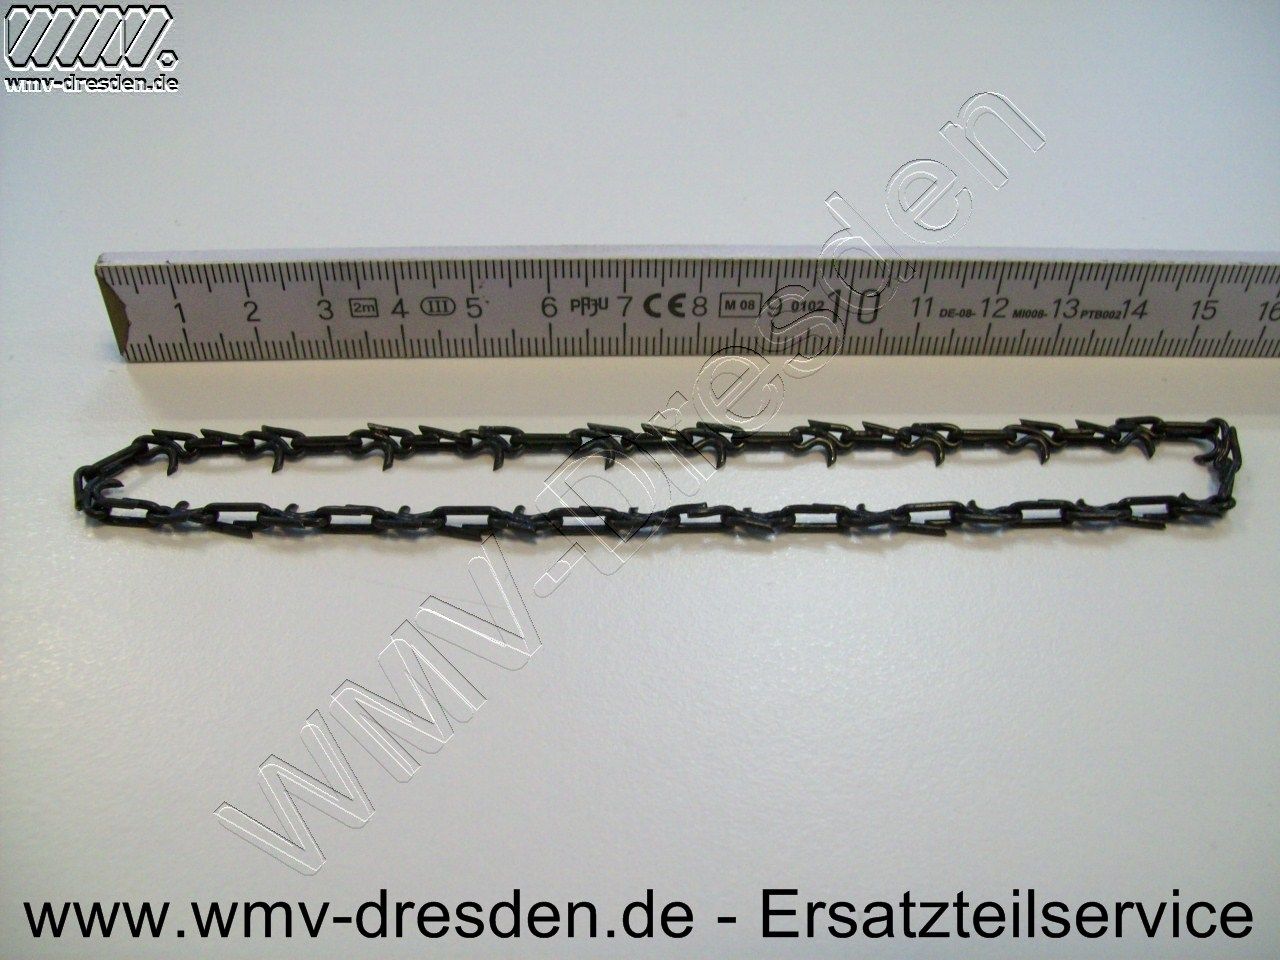 Artikel 1609203557-B17 Hersteller: Bosch-Skil-Dremel 